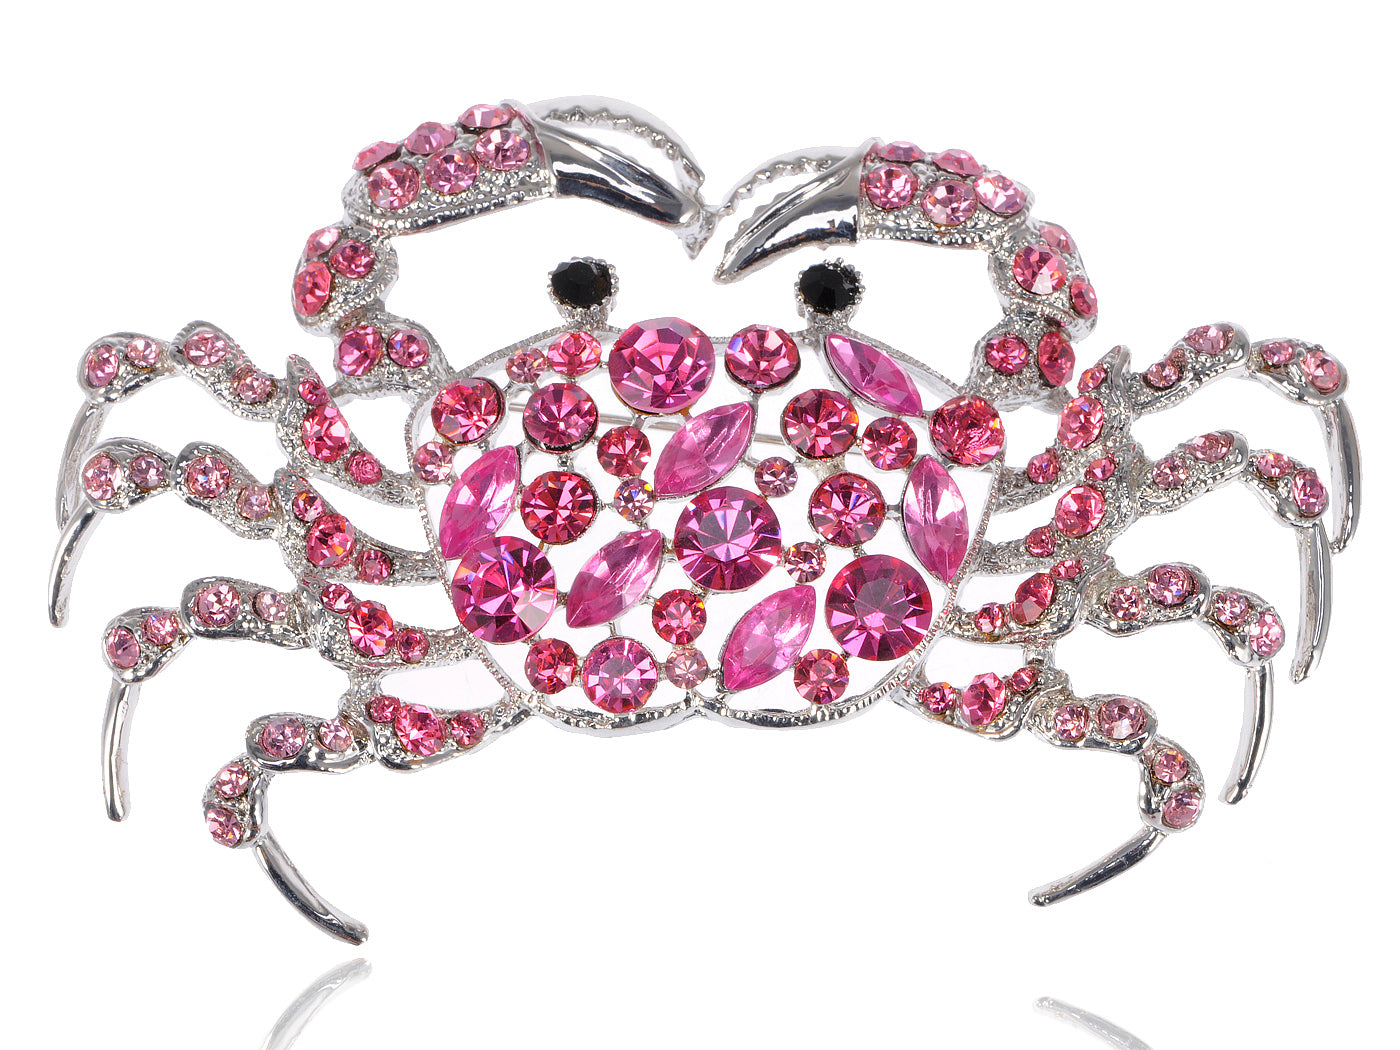 Dangerous Sinewy Rose Crab Jewelry Pin Brooch